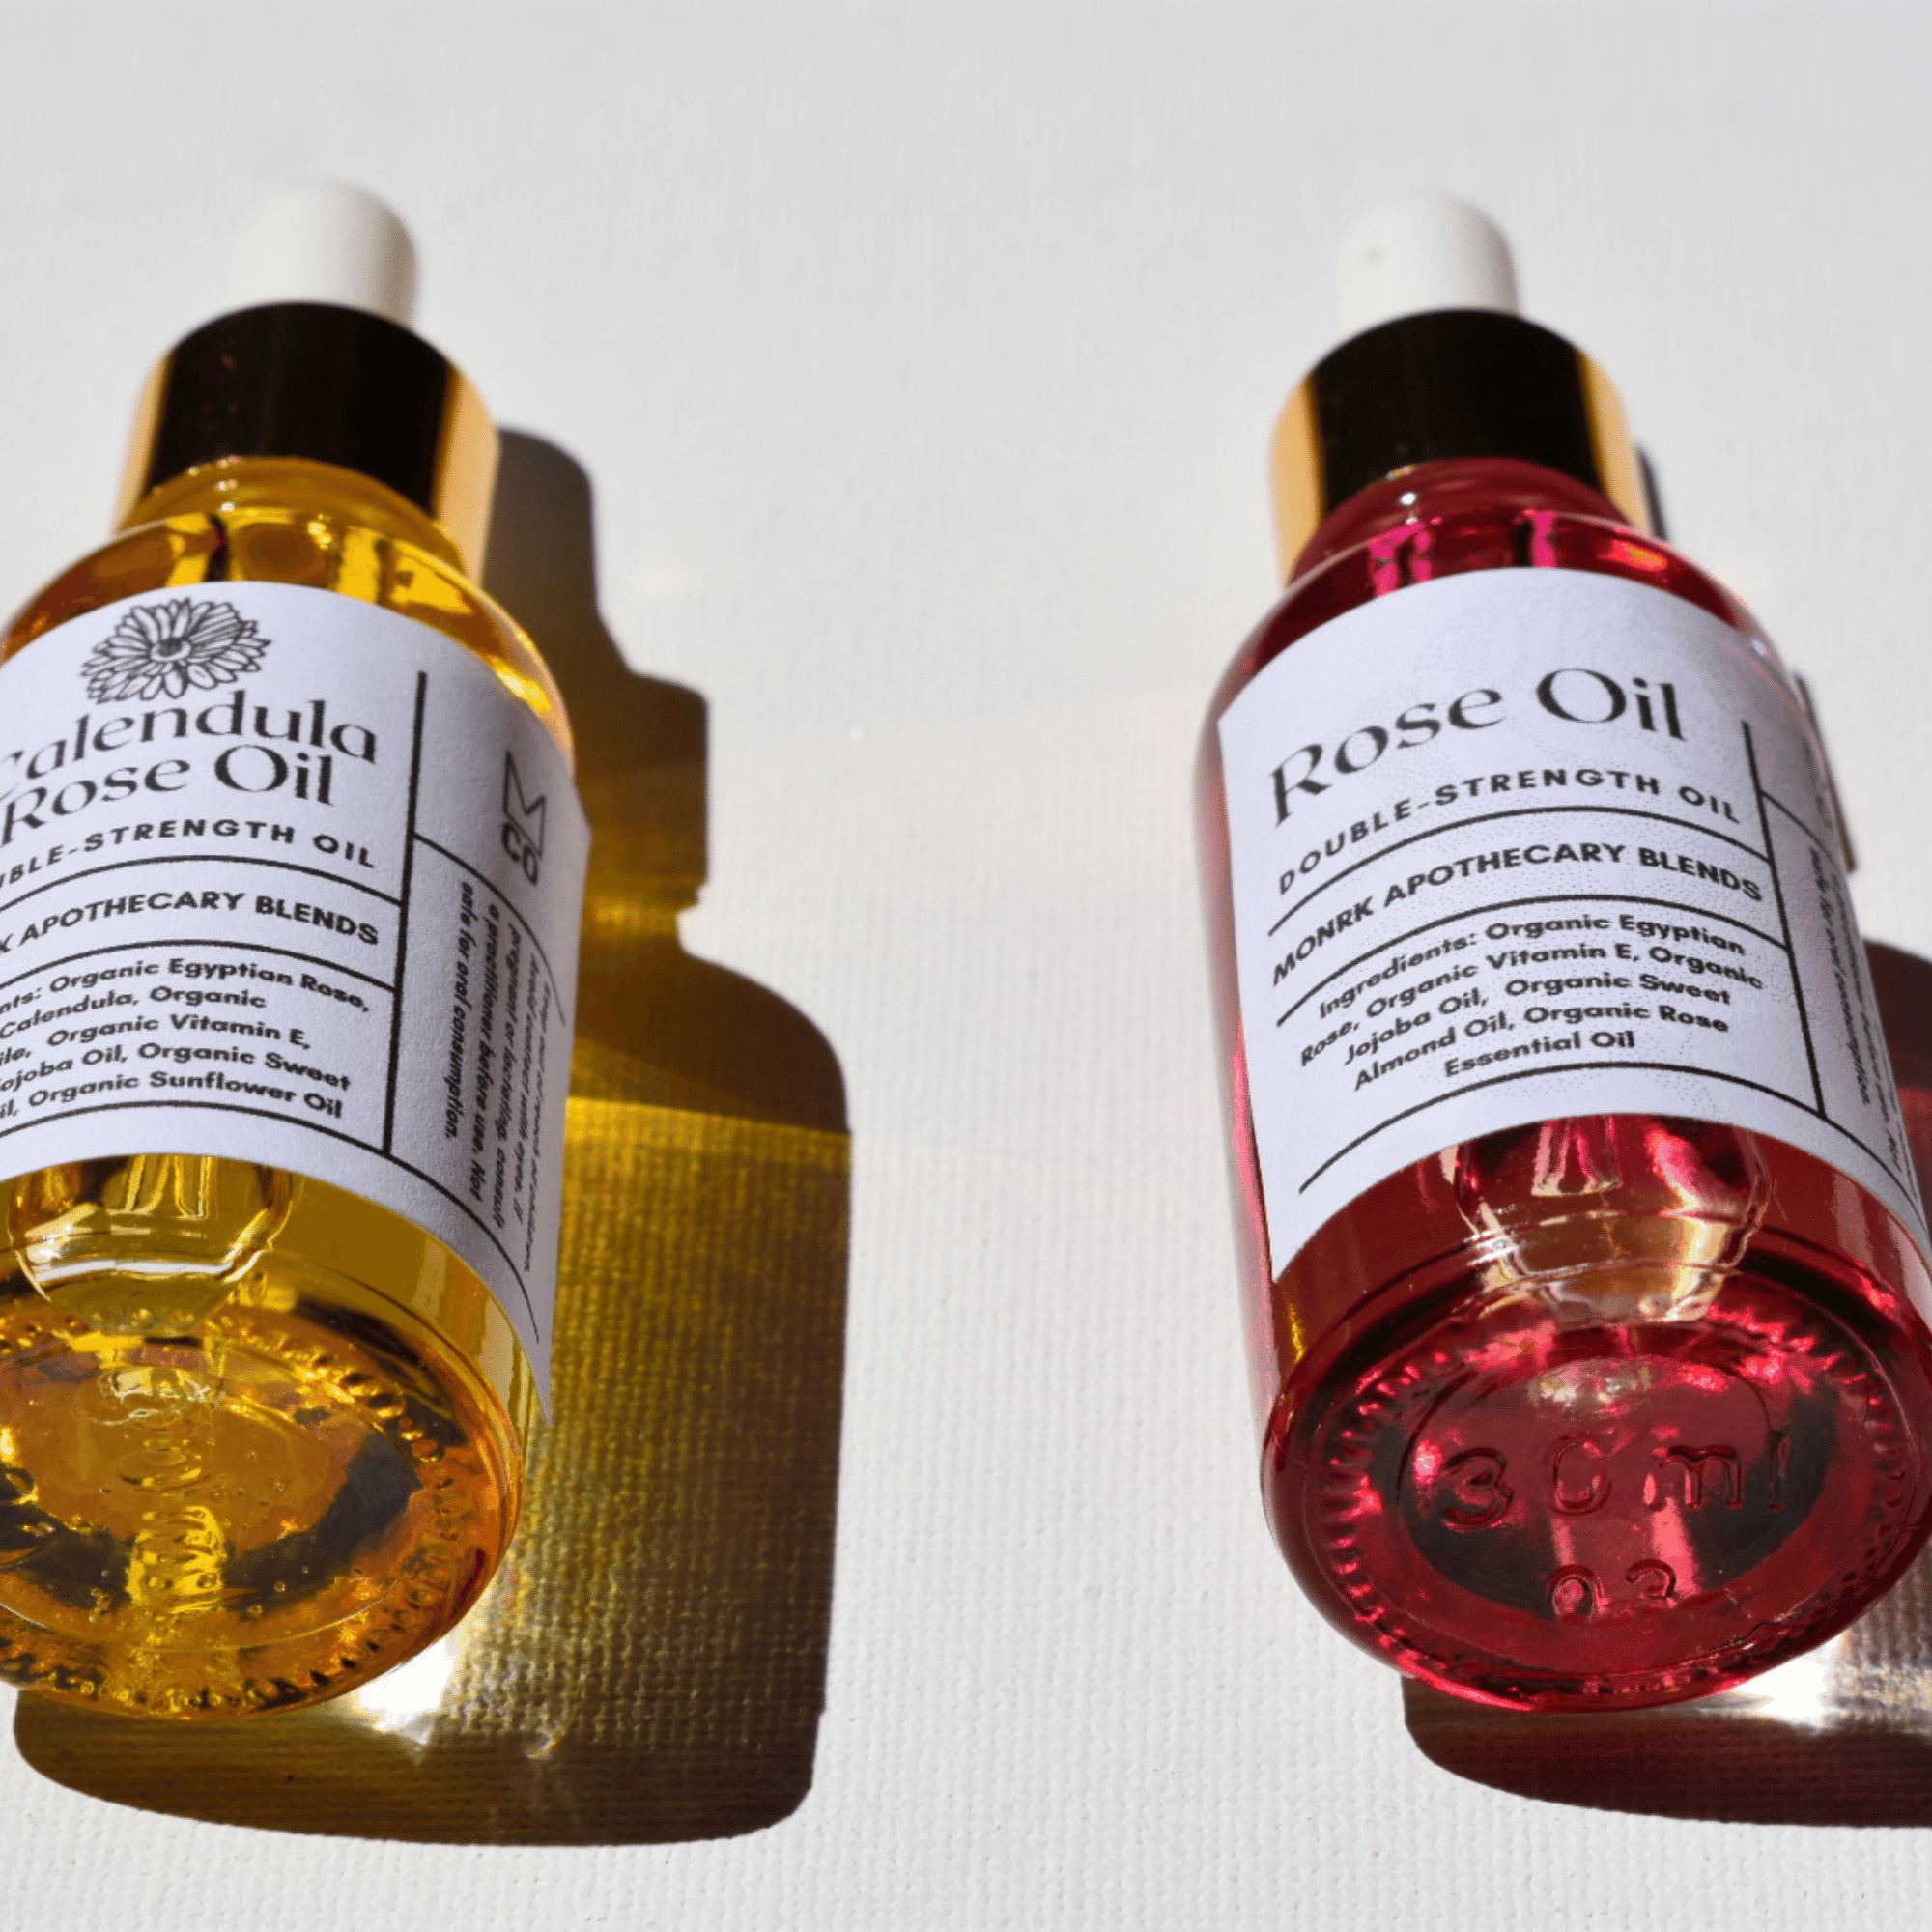 Calendula Rose Oil For Skin and Hair